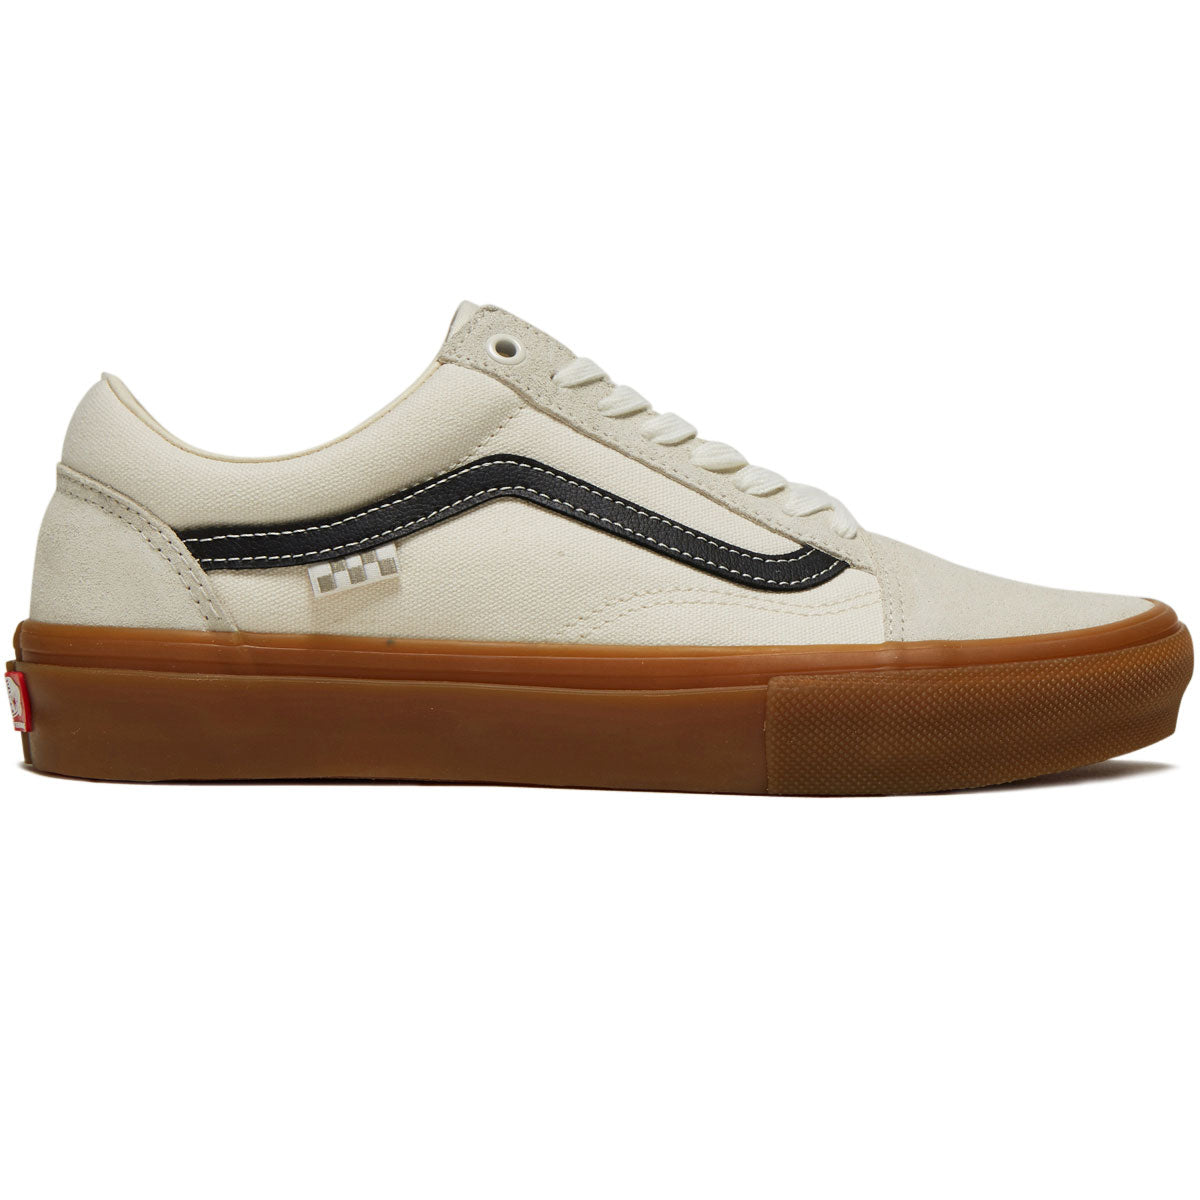 Vans Skate Old Skool Shoes - Marshmallow/Gum image 1